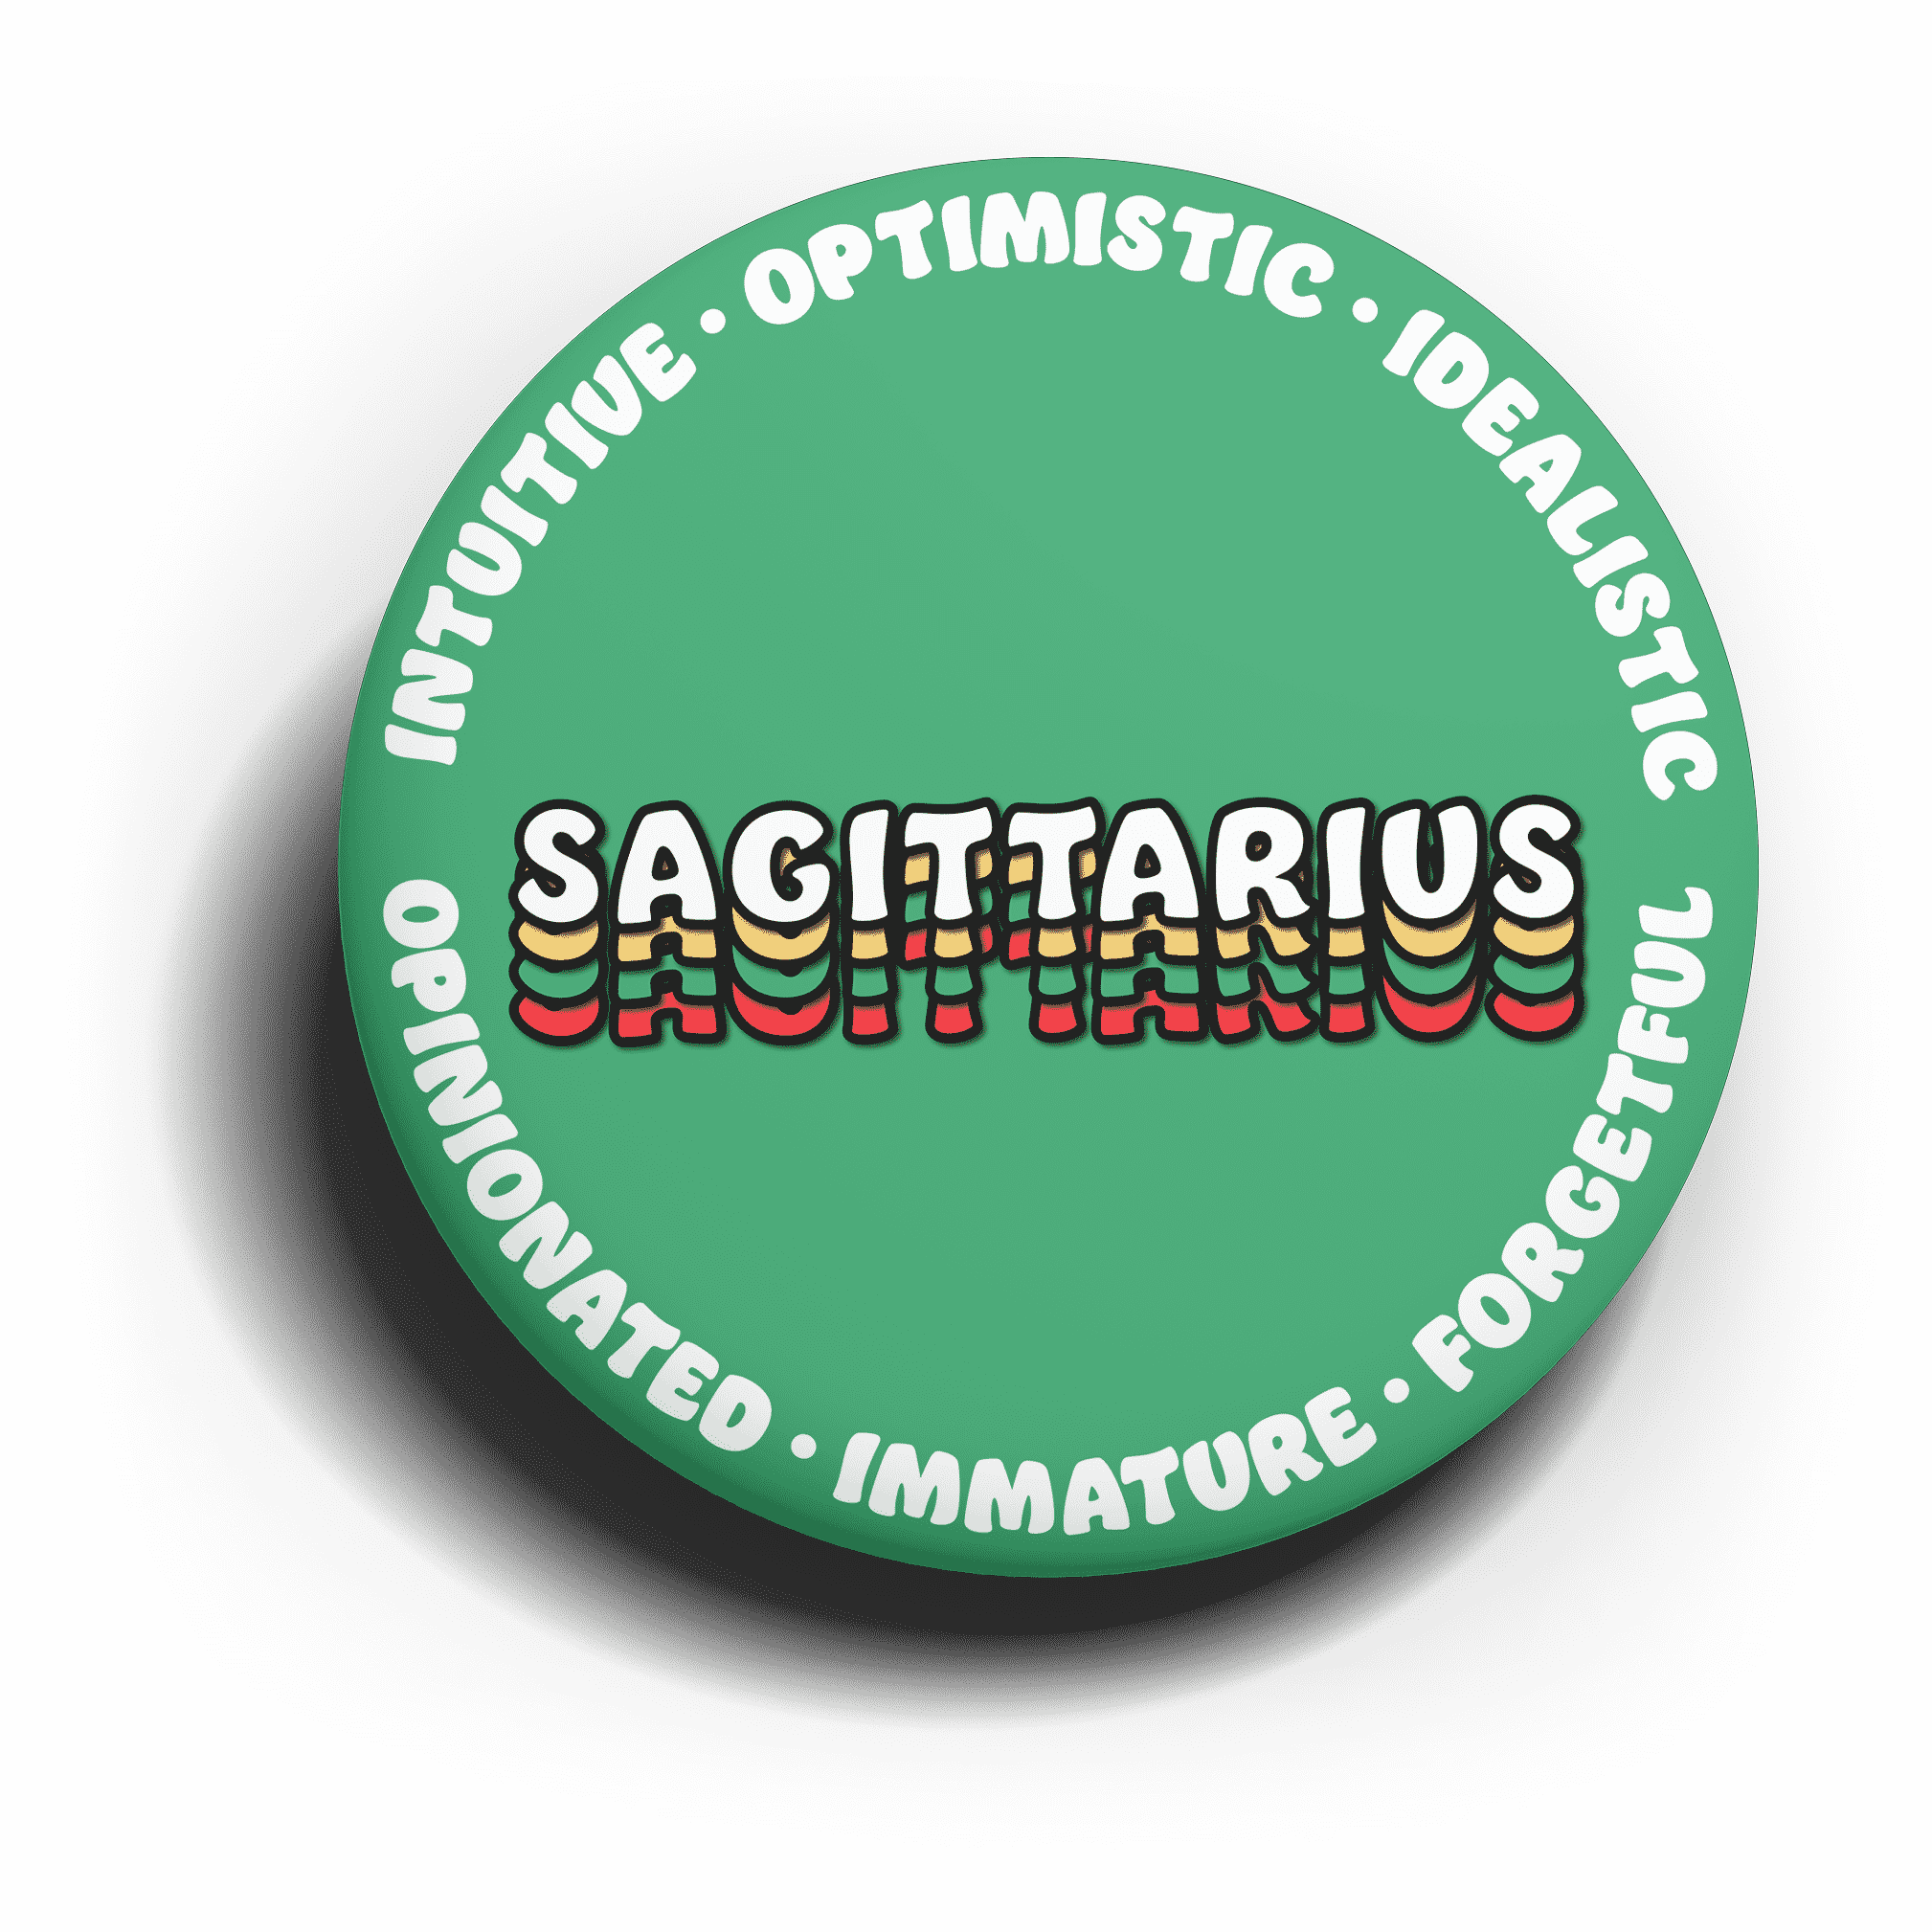 (Zodiac) Sagittarius Characteristics